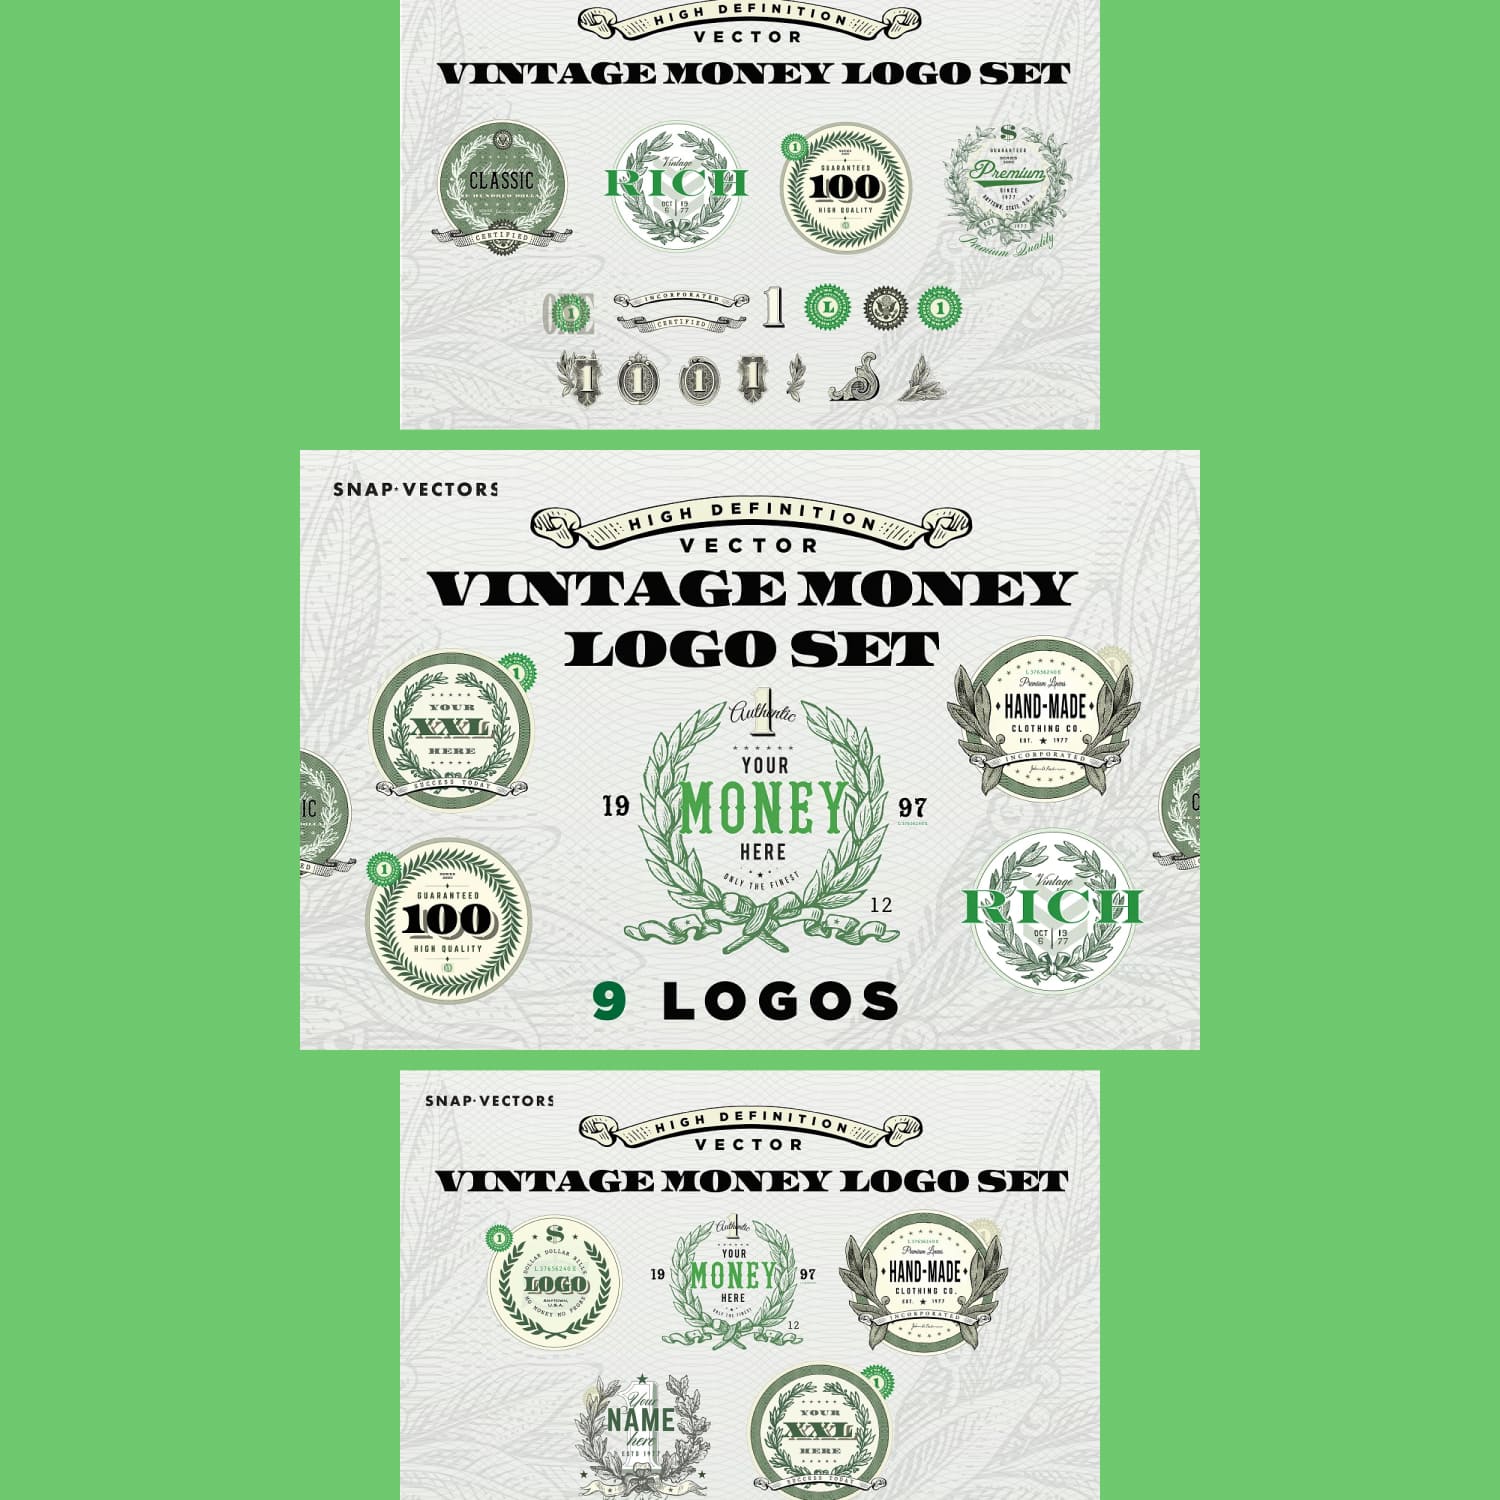 Vector Vintage Money Logo Set cover.